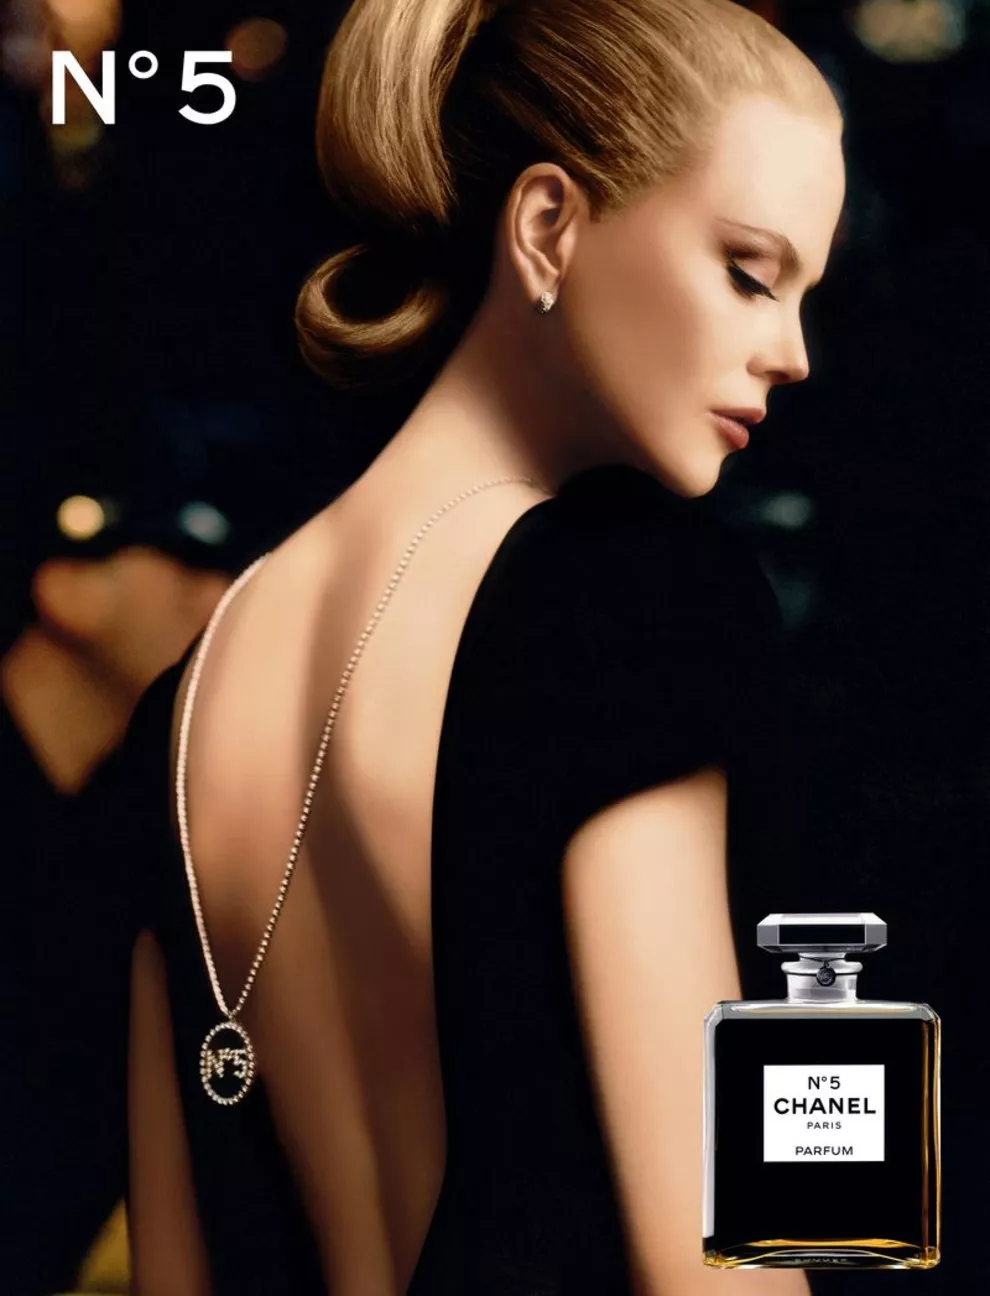 Ніколь Кідман у рекламі Chanel